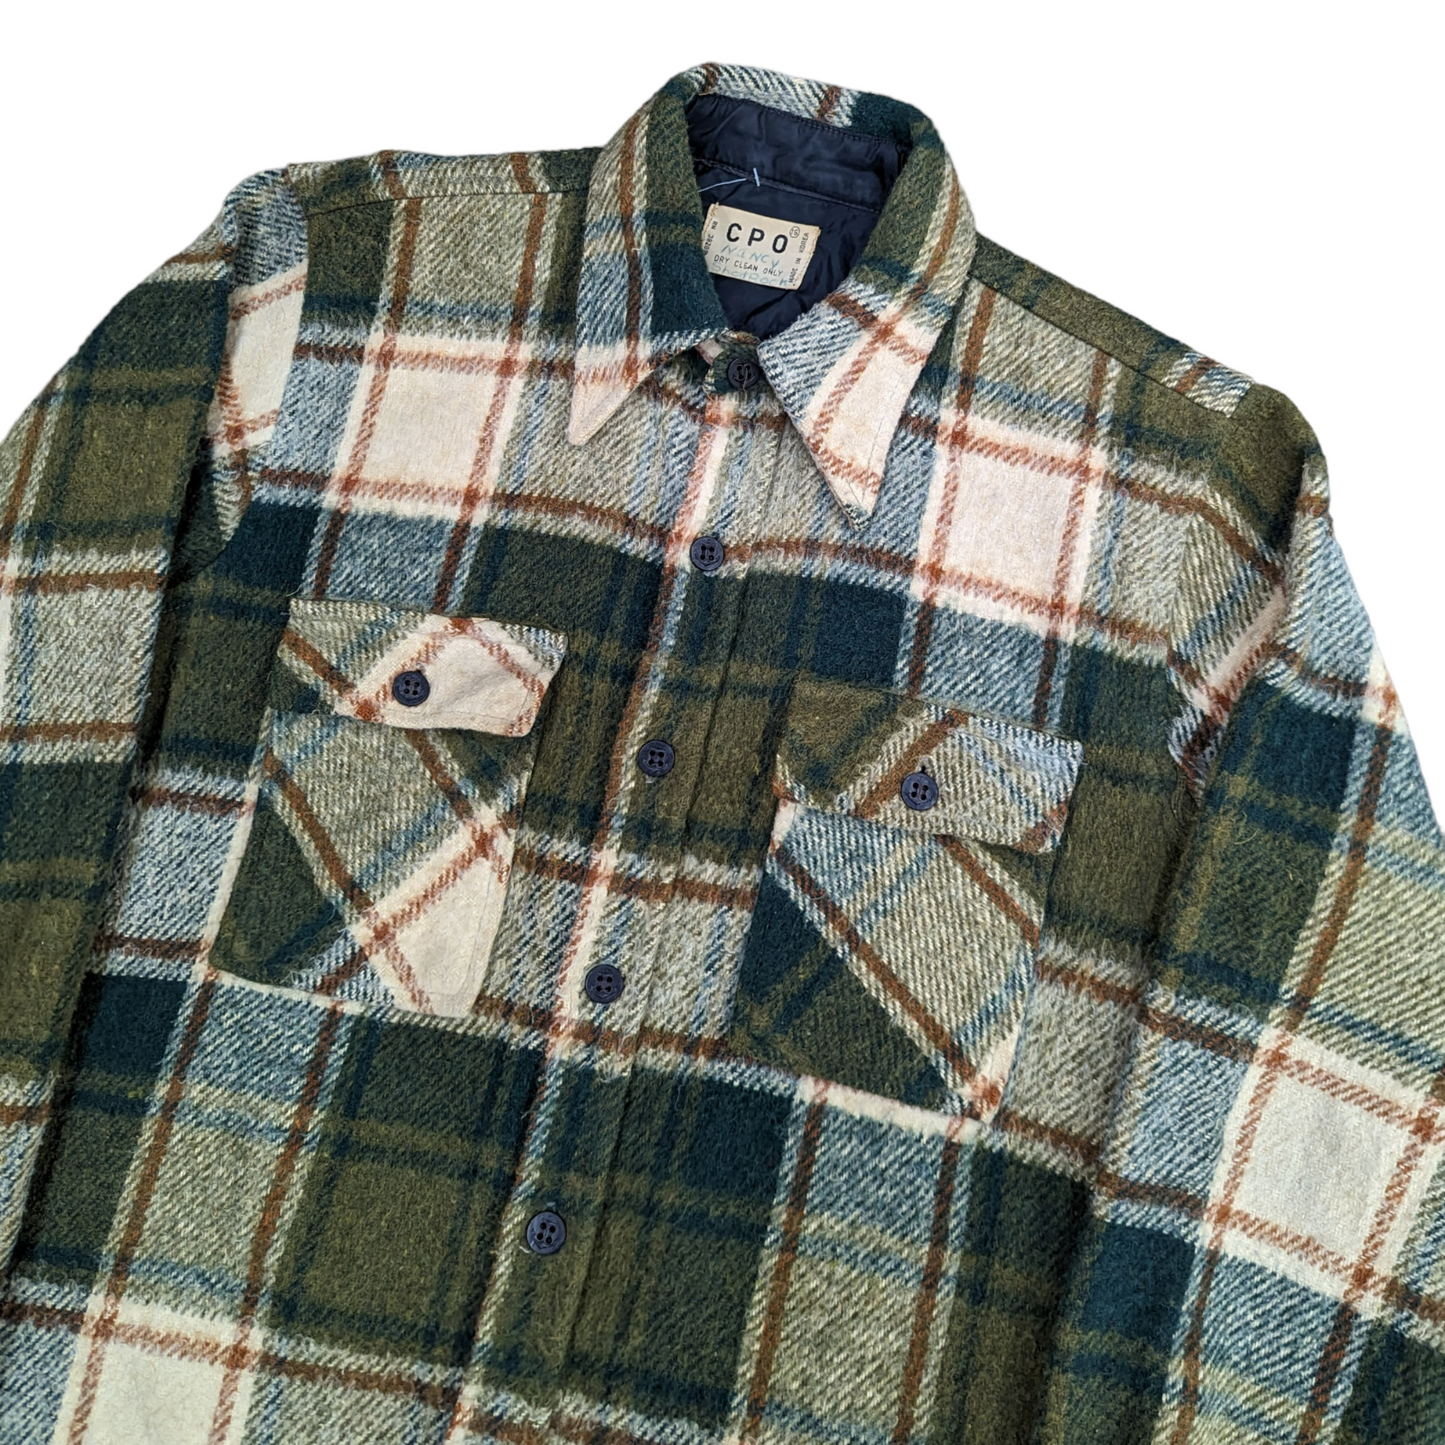 Vintage CPO Wool Blend Shirt Size XS/S